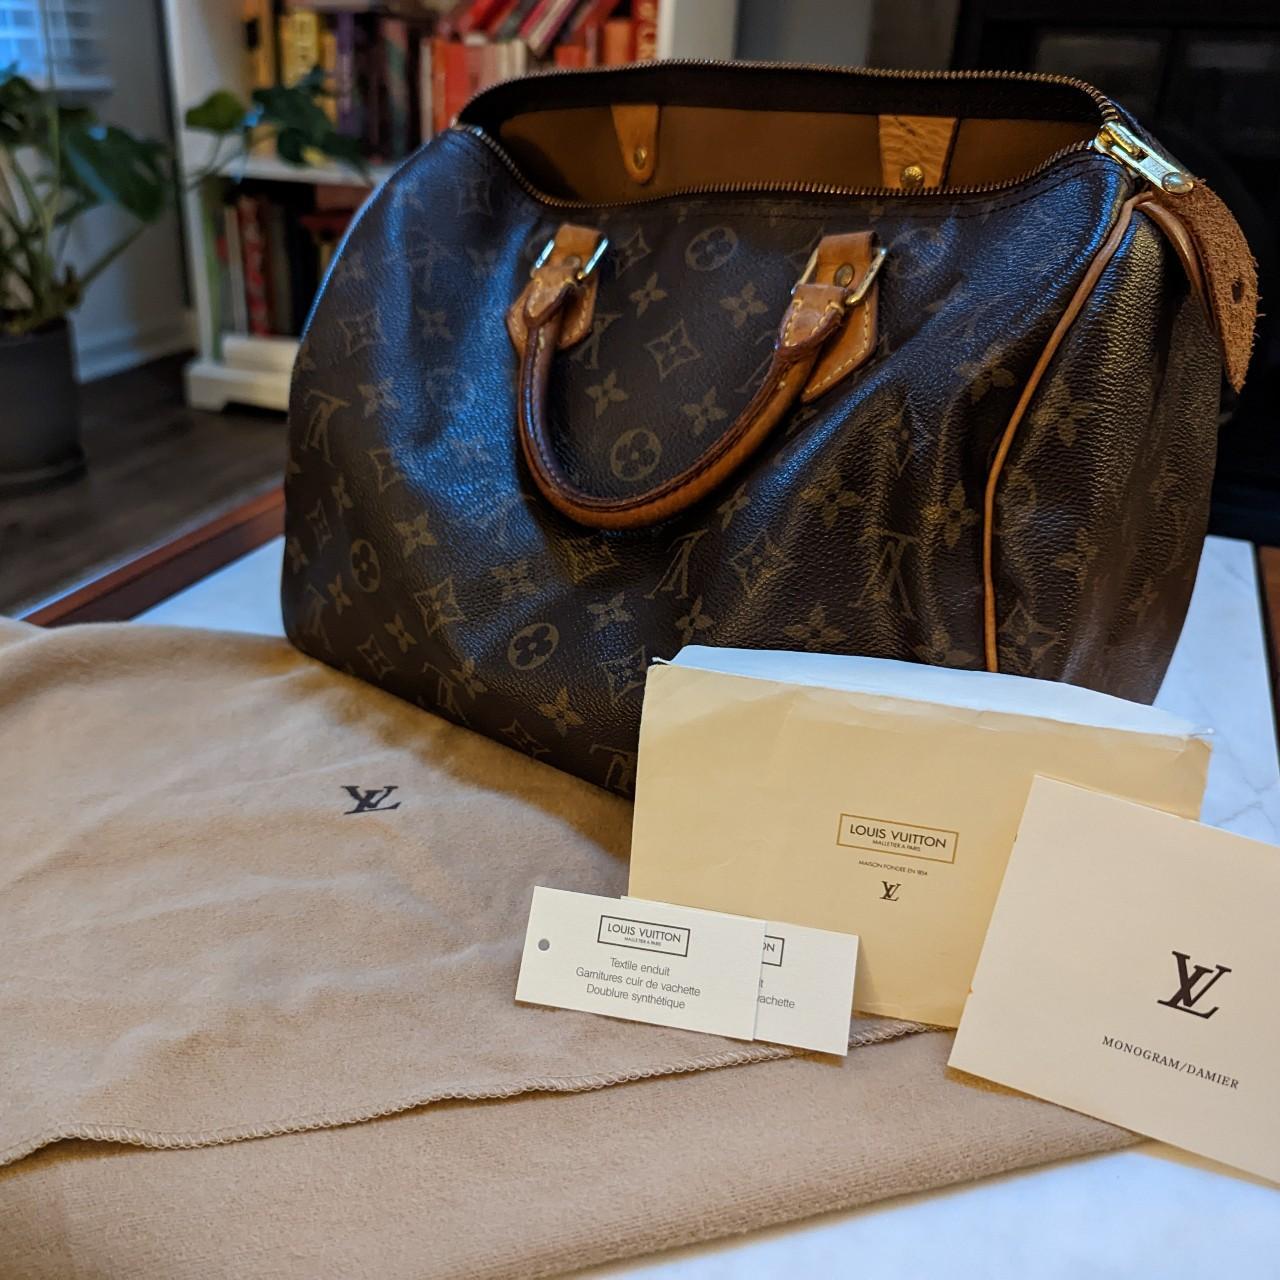 Authentic vintage Louis Vuitton monogram Speedy 30.